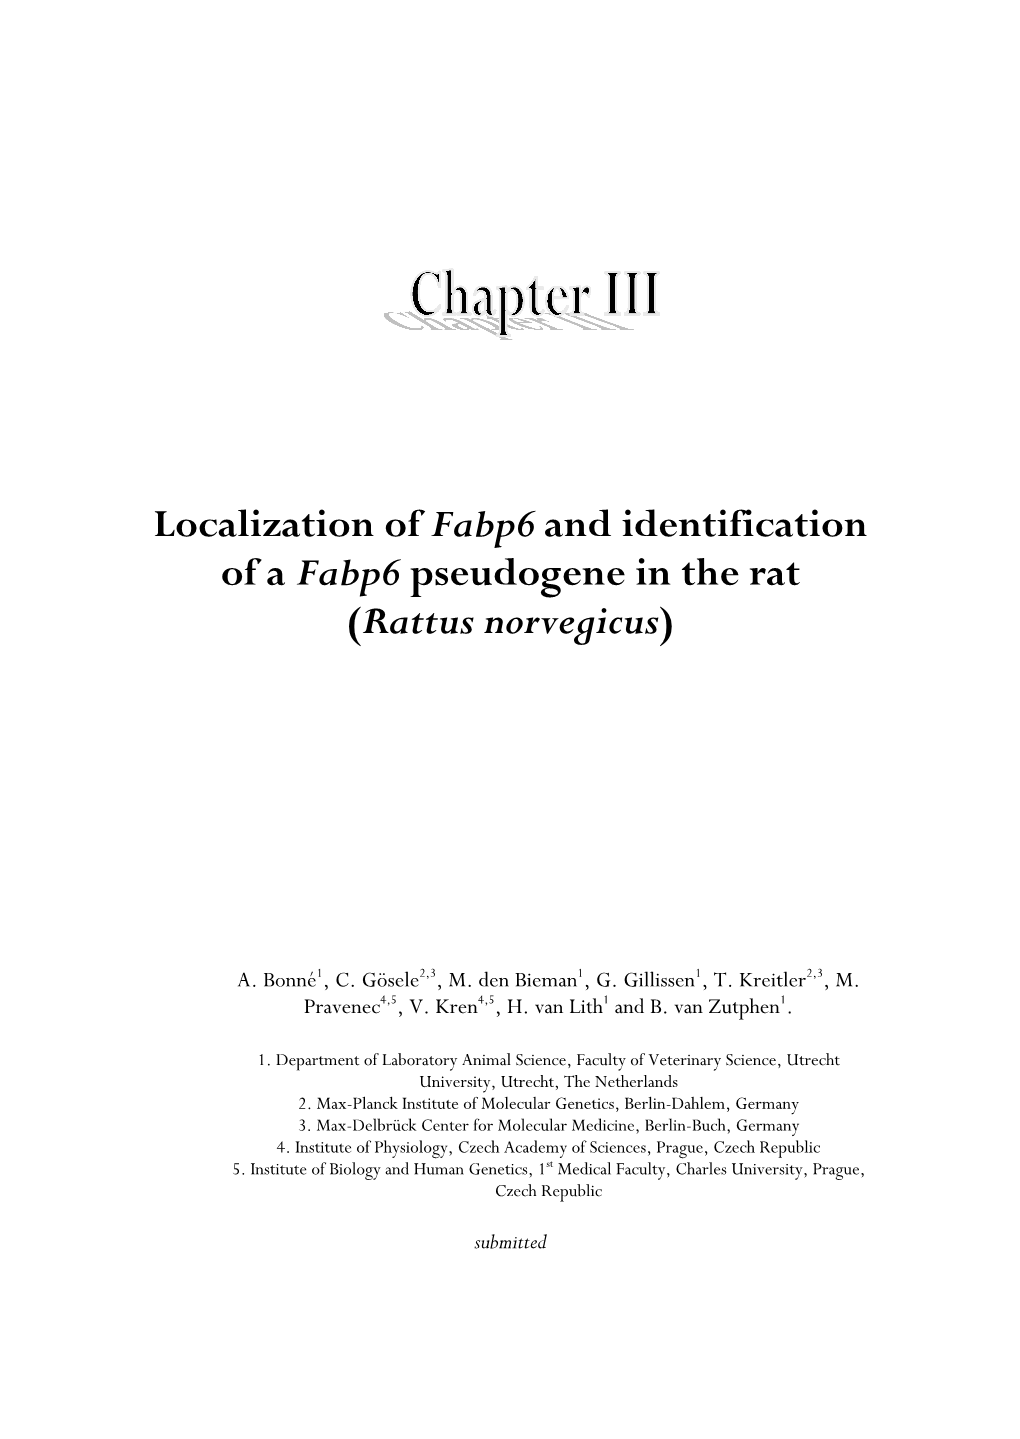 Localization of Fabp6 and Identification of a Fabp6 Pseudogene in the Rat (Rattus Norvegicus)